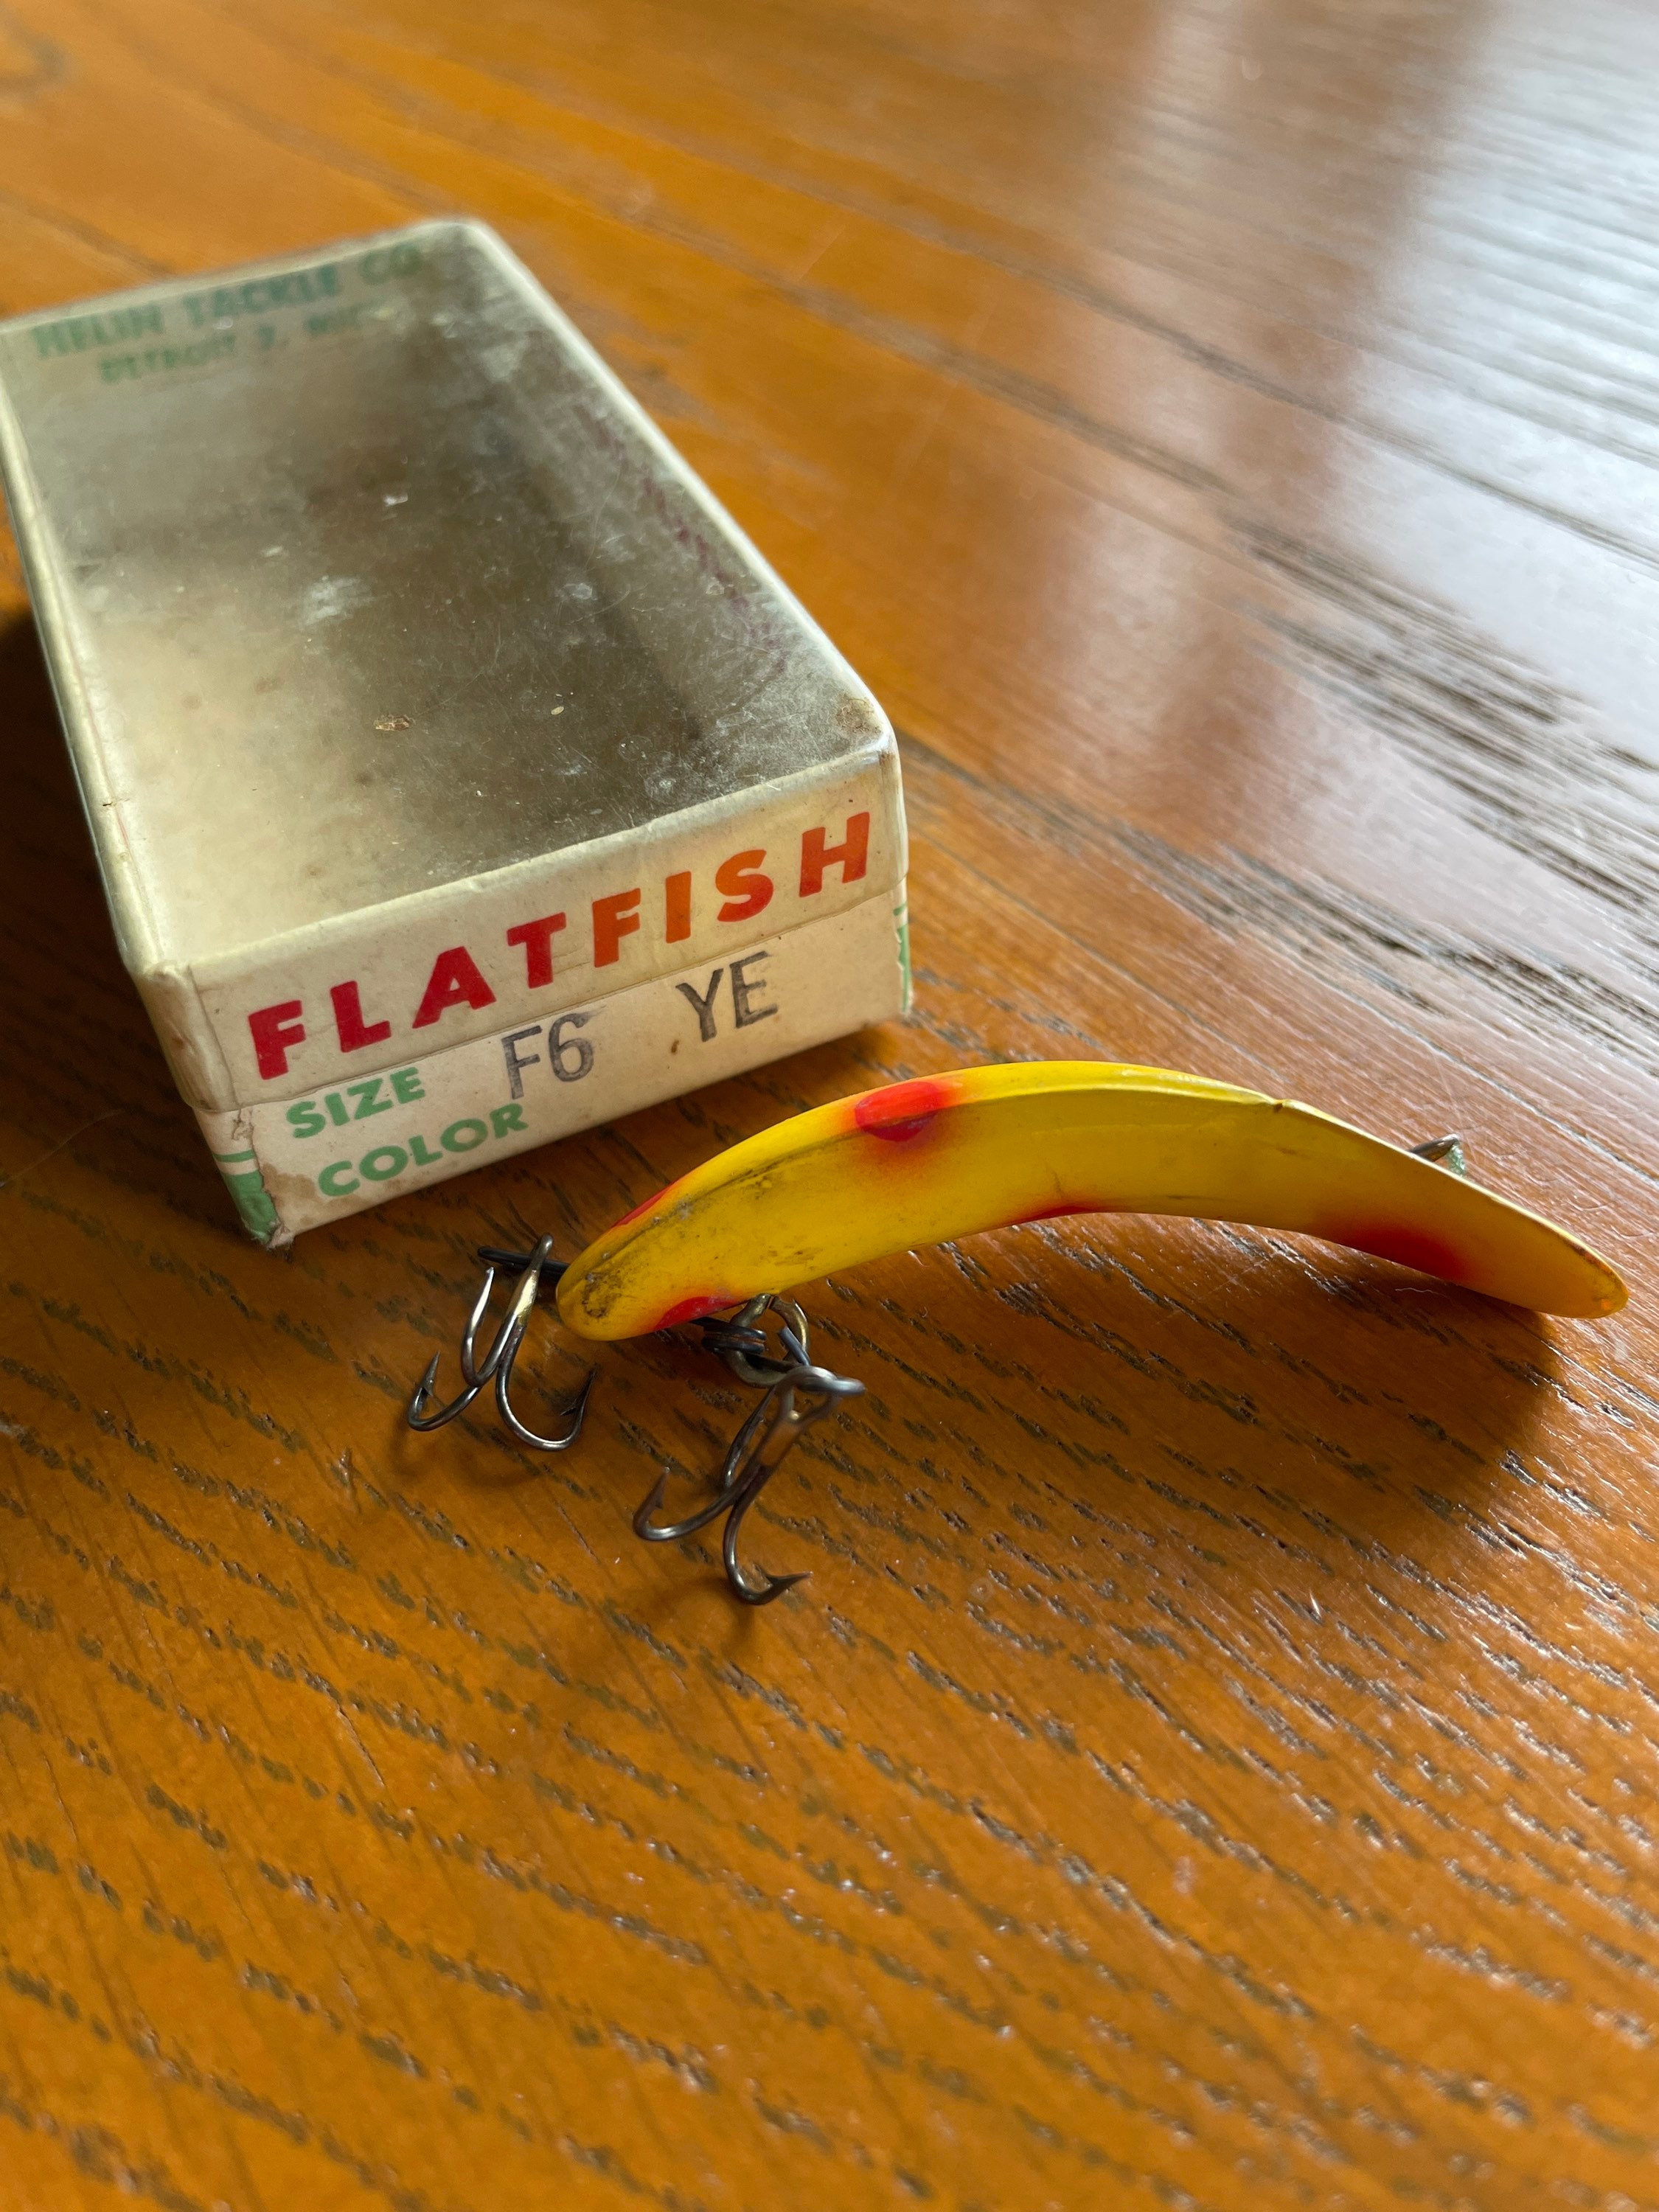 Flatfish Lures 